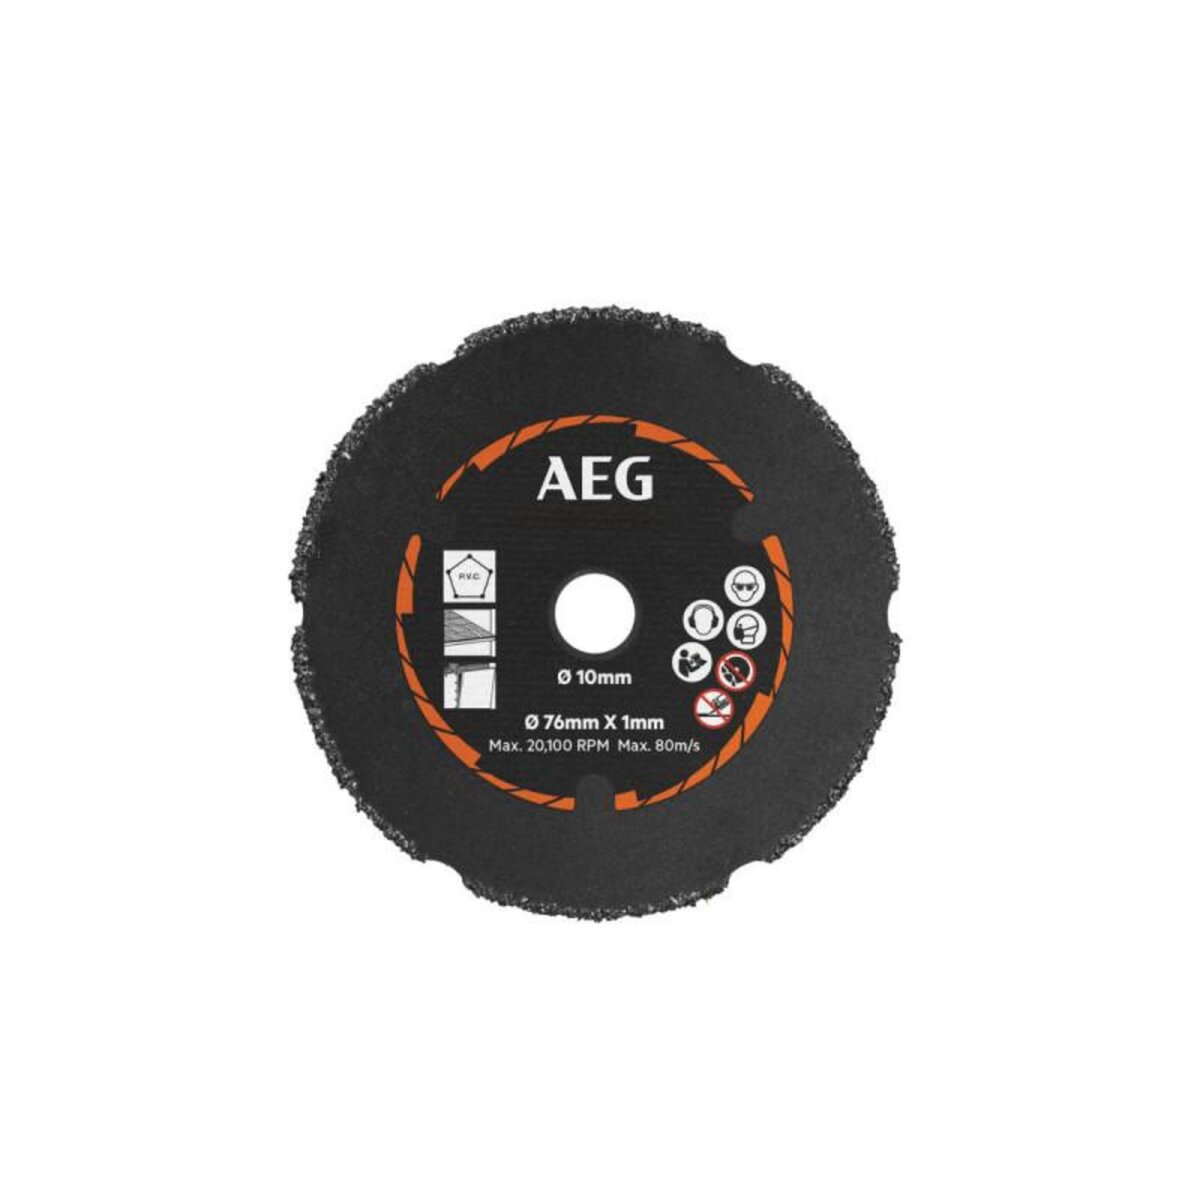 AEG Disque abrasif carbure - 76mm - AAKMMAC01 pas cher 